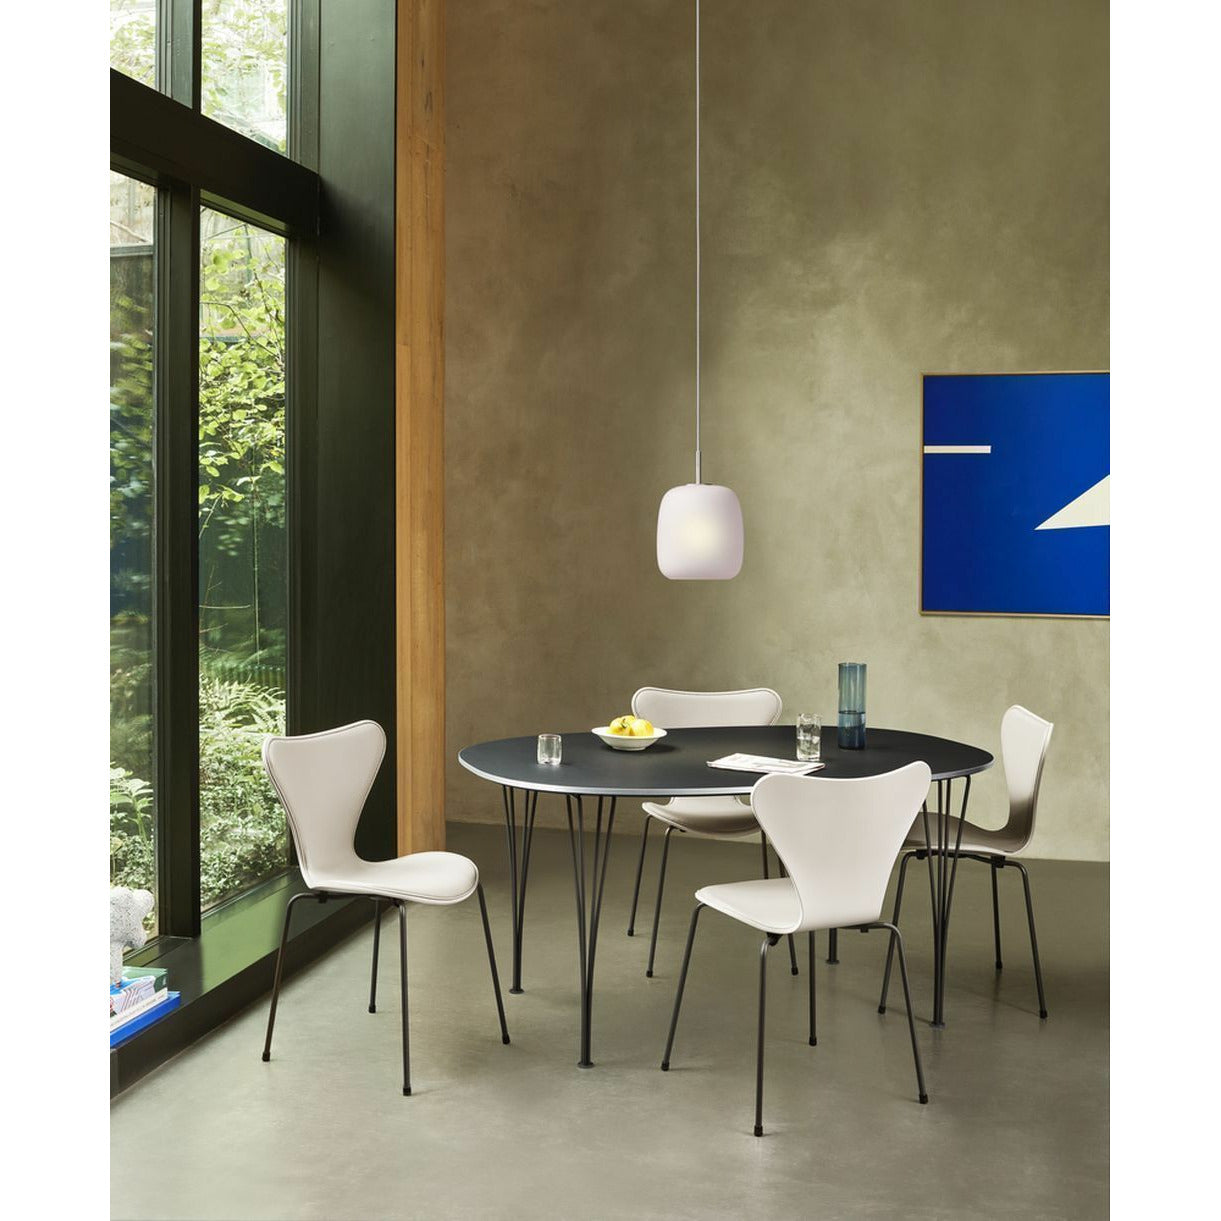 Fritz Hansen Super Ellipse Dining Table 100x150 cm, hvit/varm grafitt